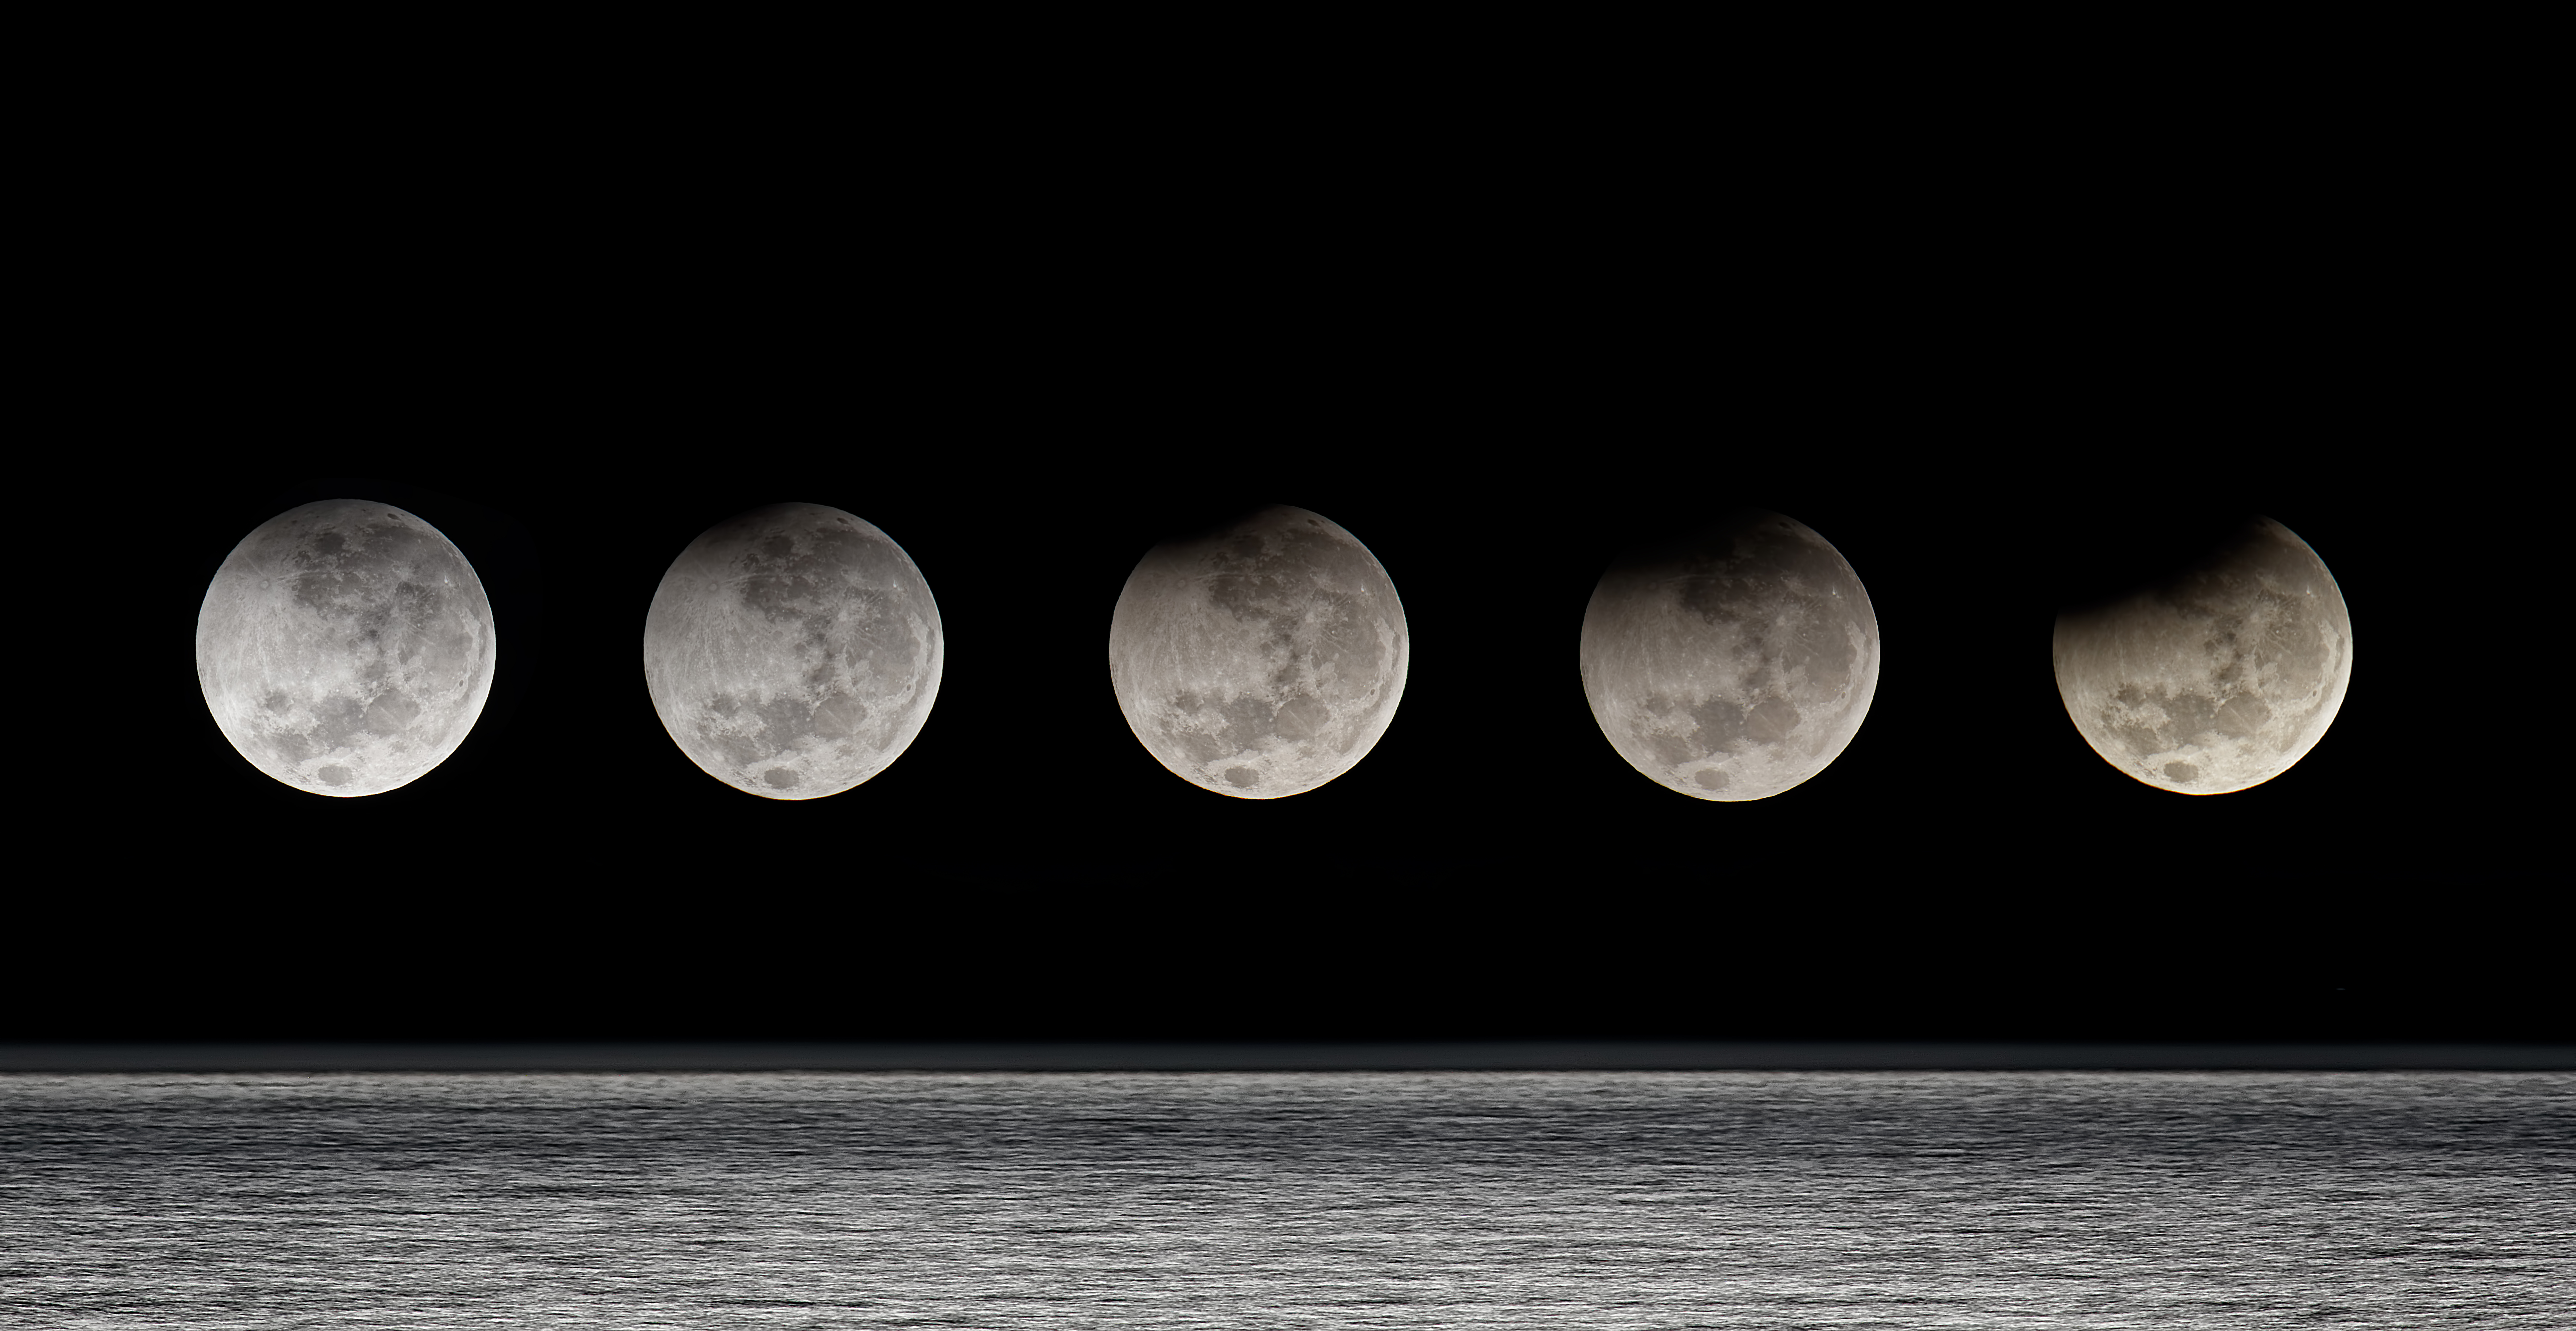 Moon pics. Луна. Заставка на рабочий стол Луна. Фото Луны. Изображение Луны.